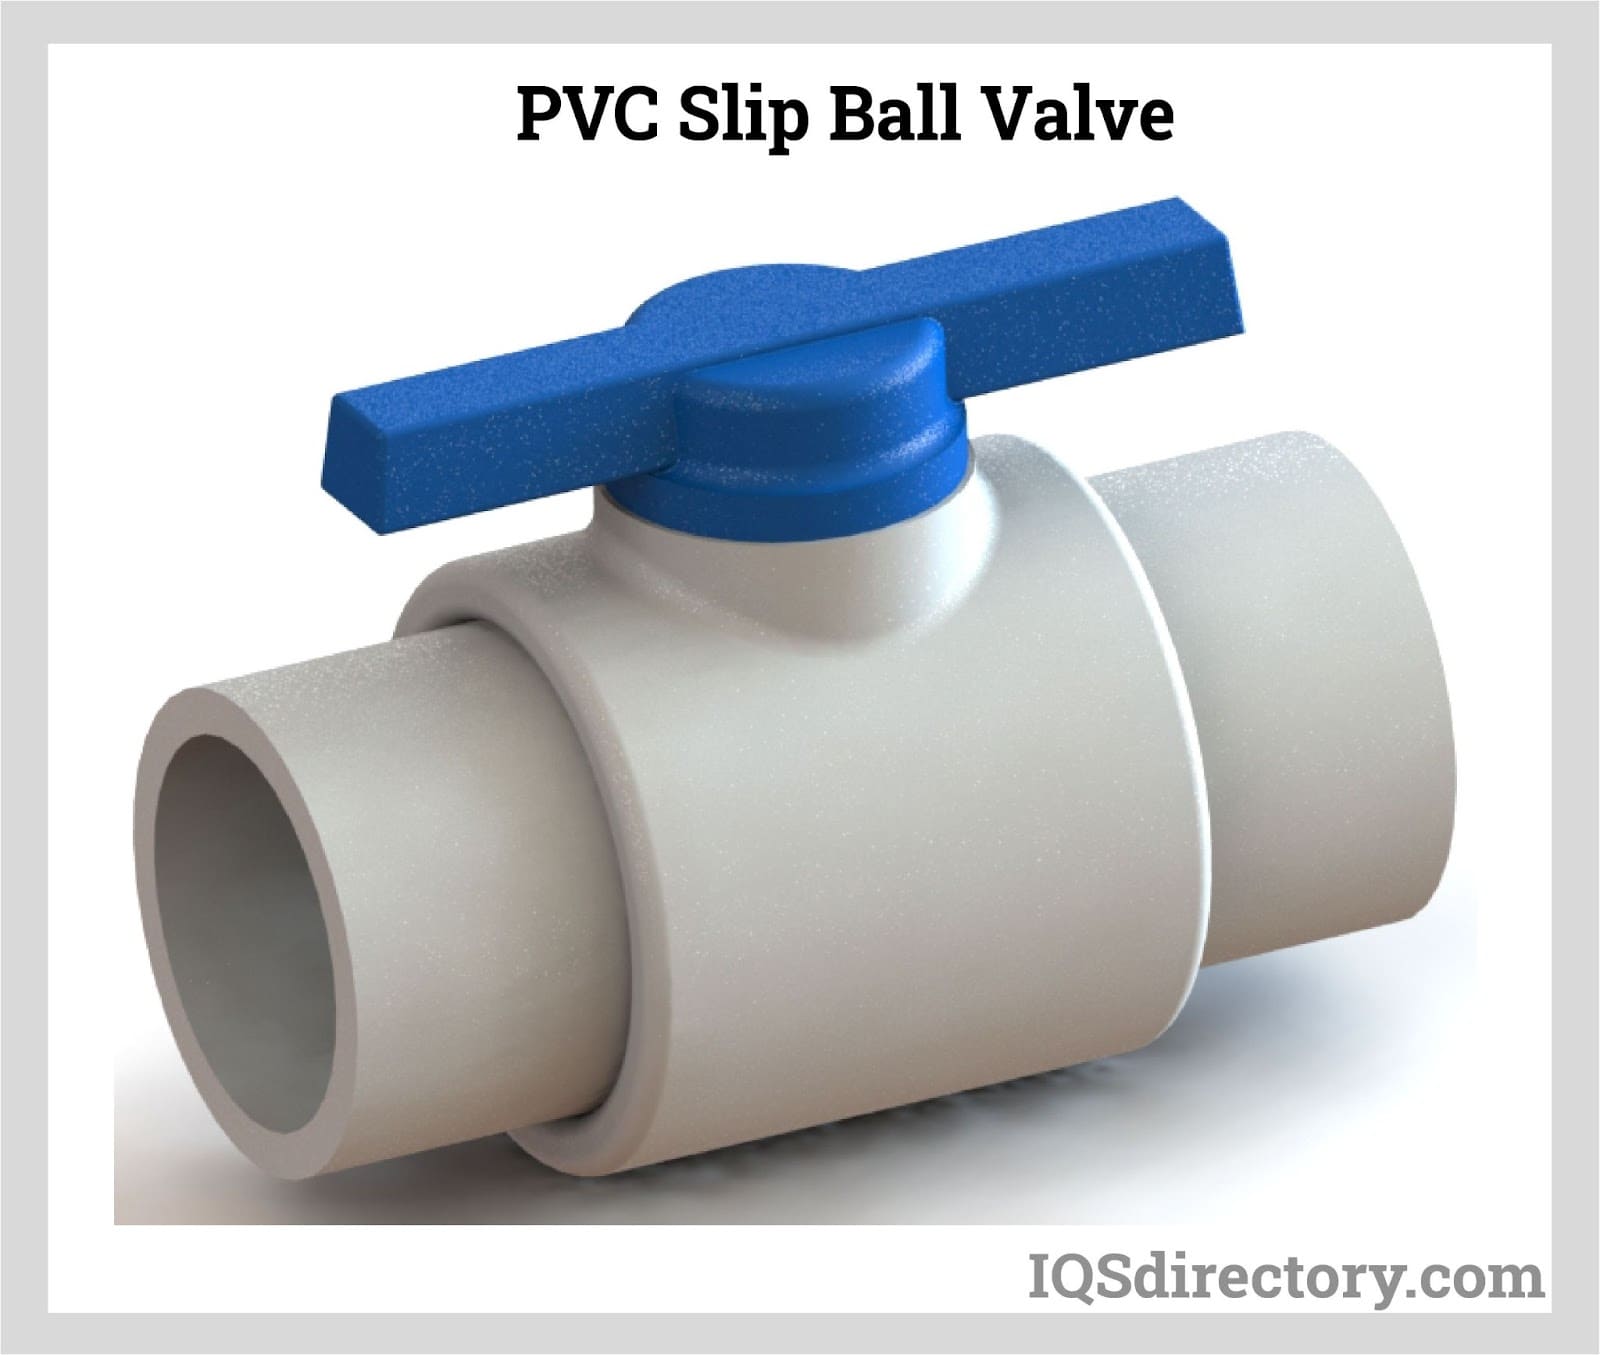 PVC Slip Ball Valve